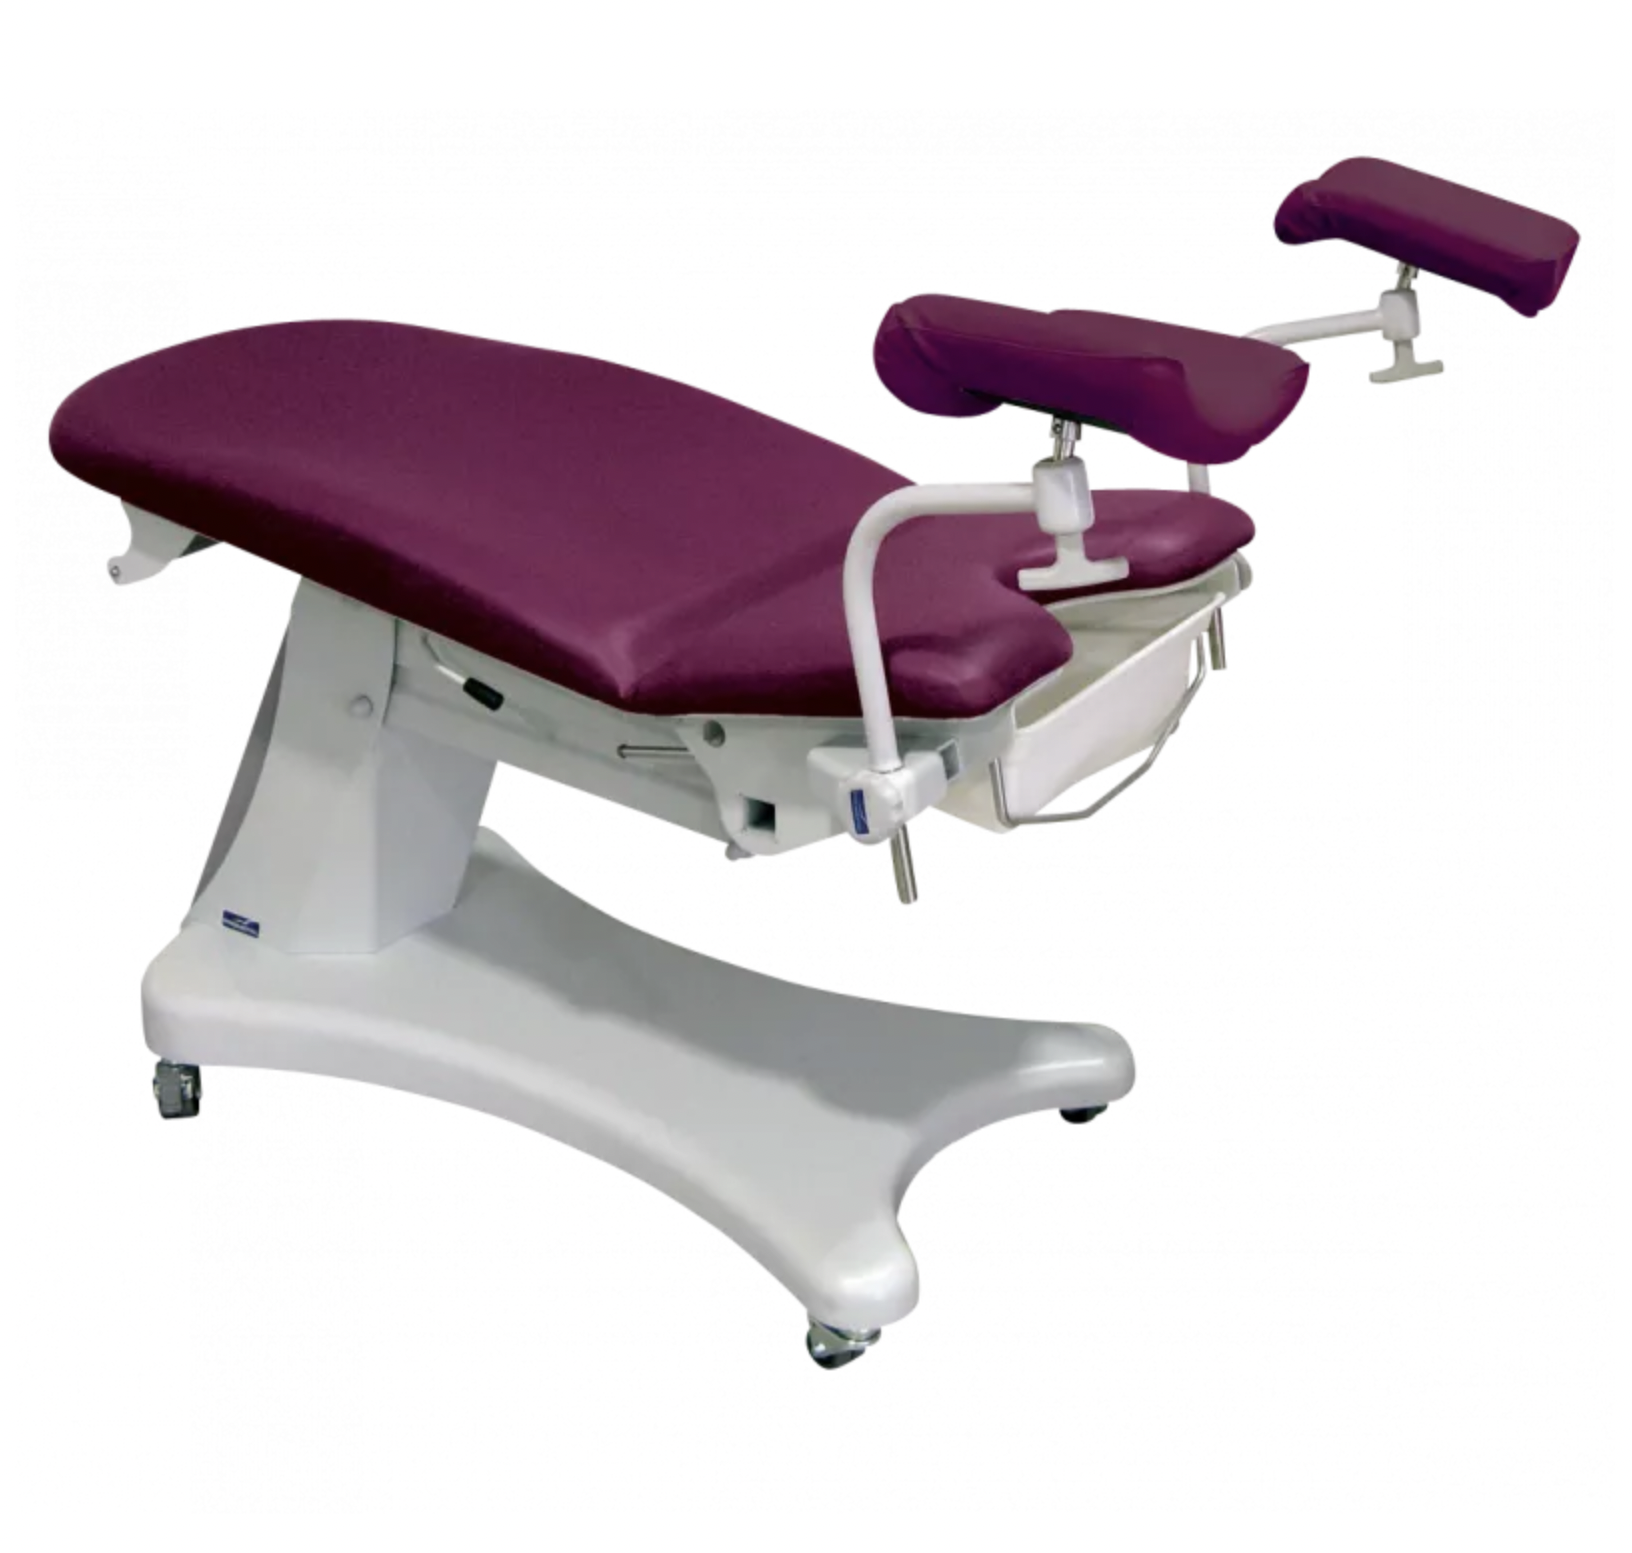 ELANSA fauteuil gynécologie de chez Promotal made in France by Tablelya